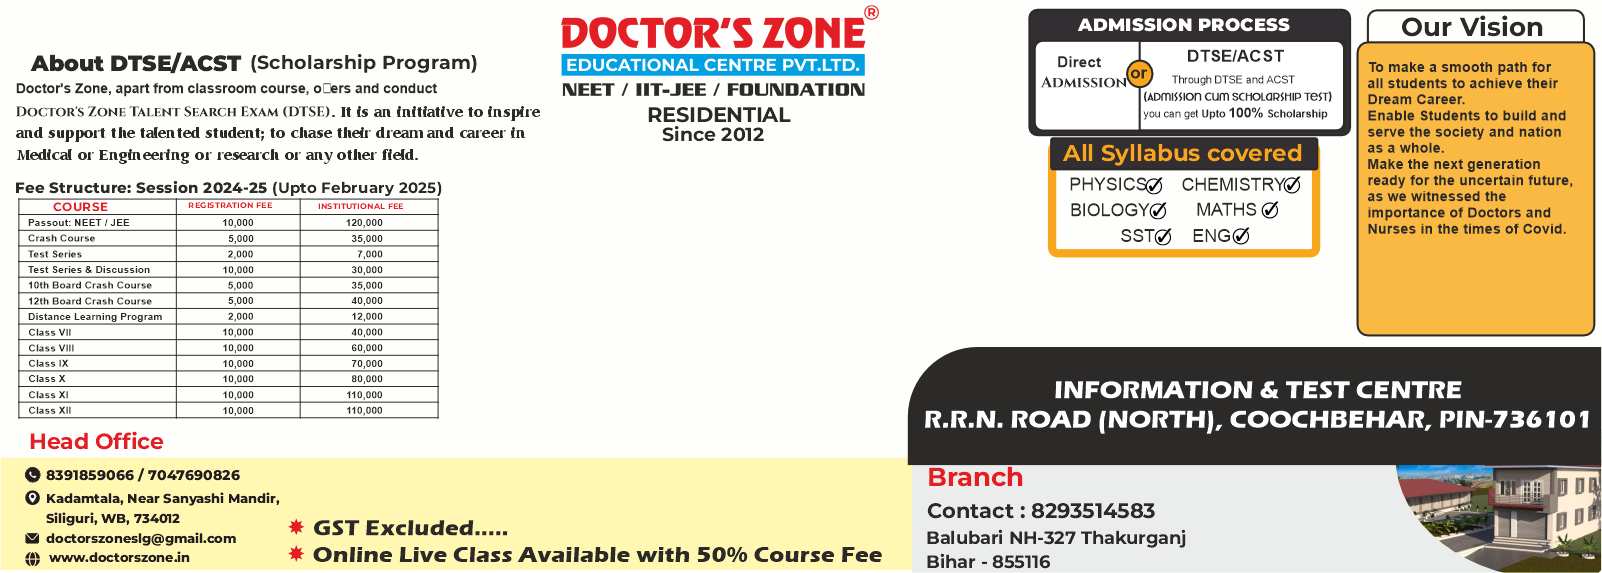 Doctors Zone Educational Centre